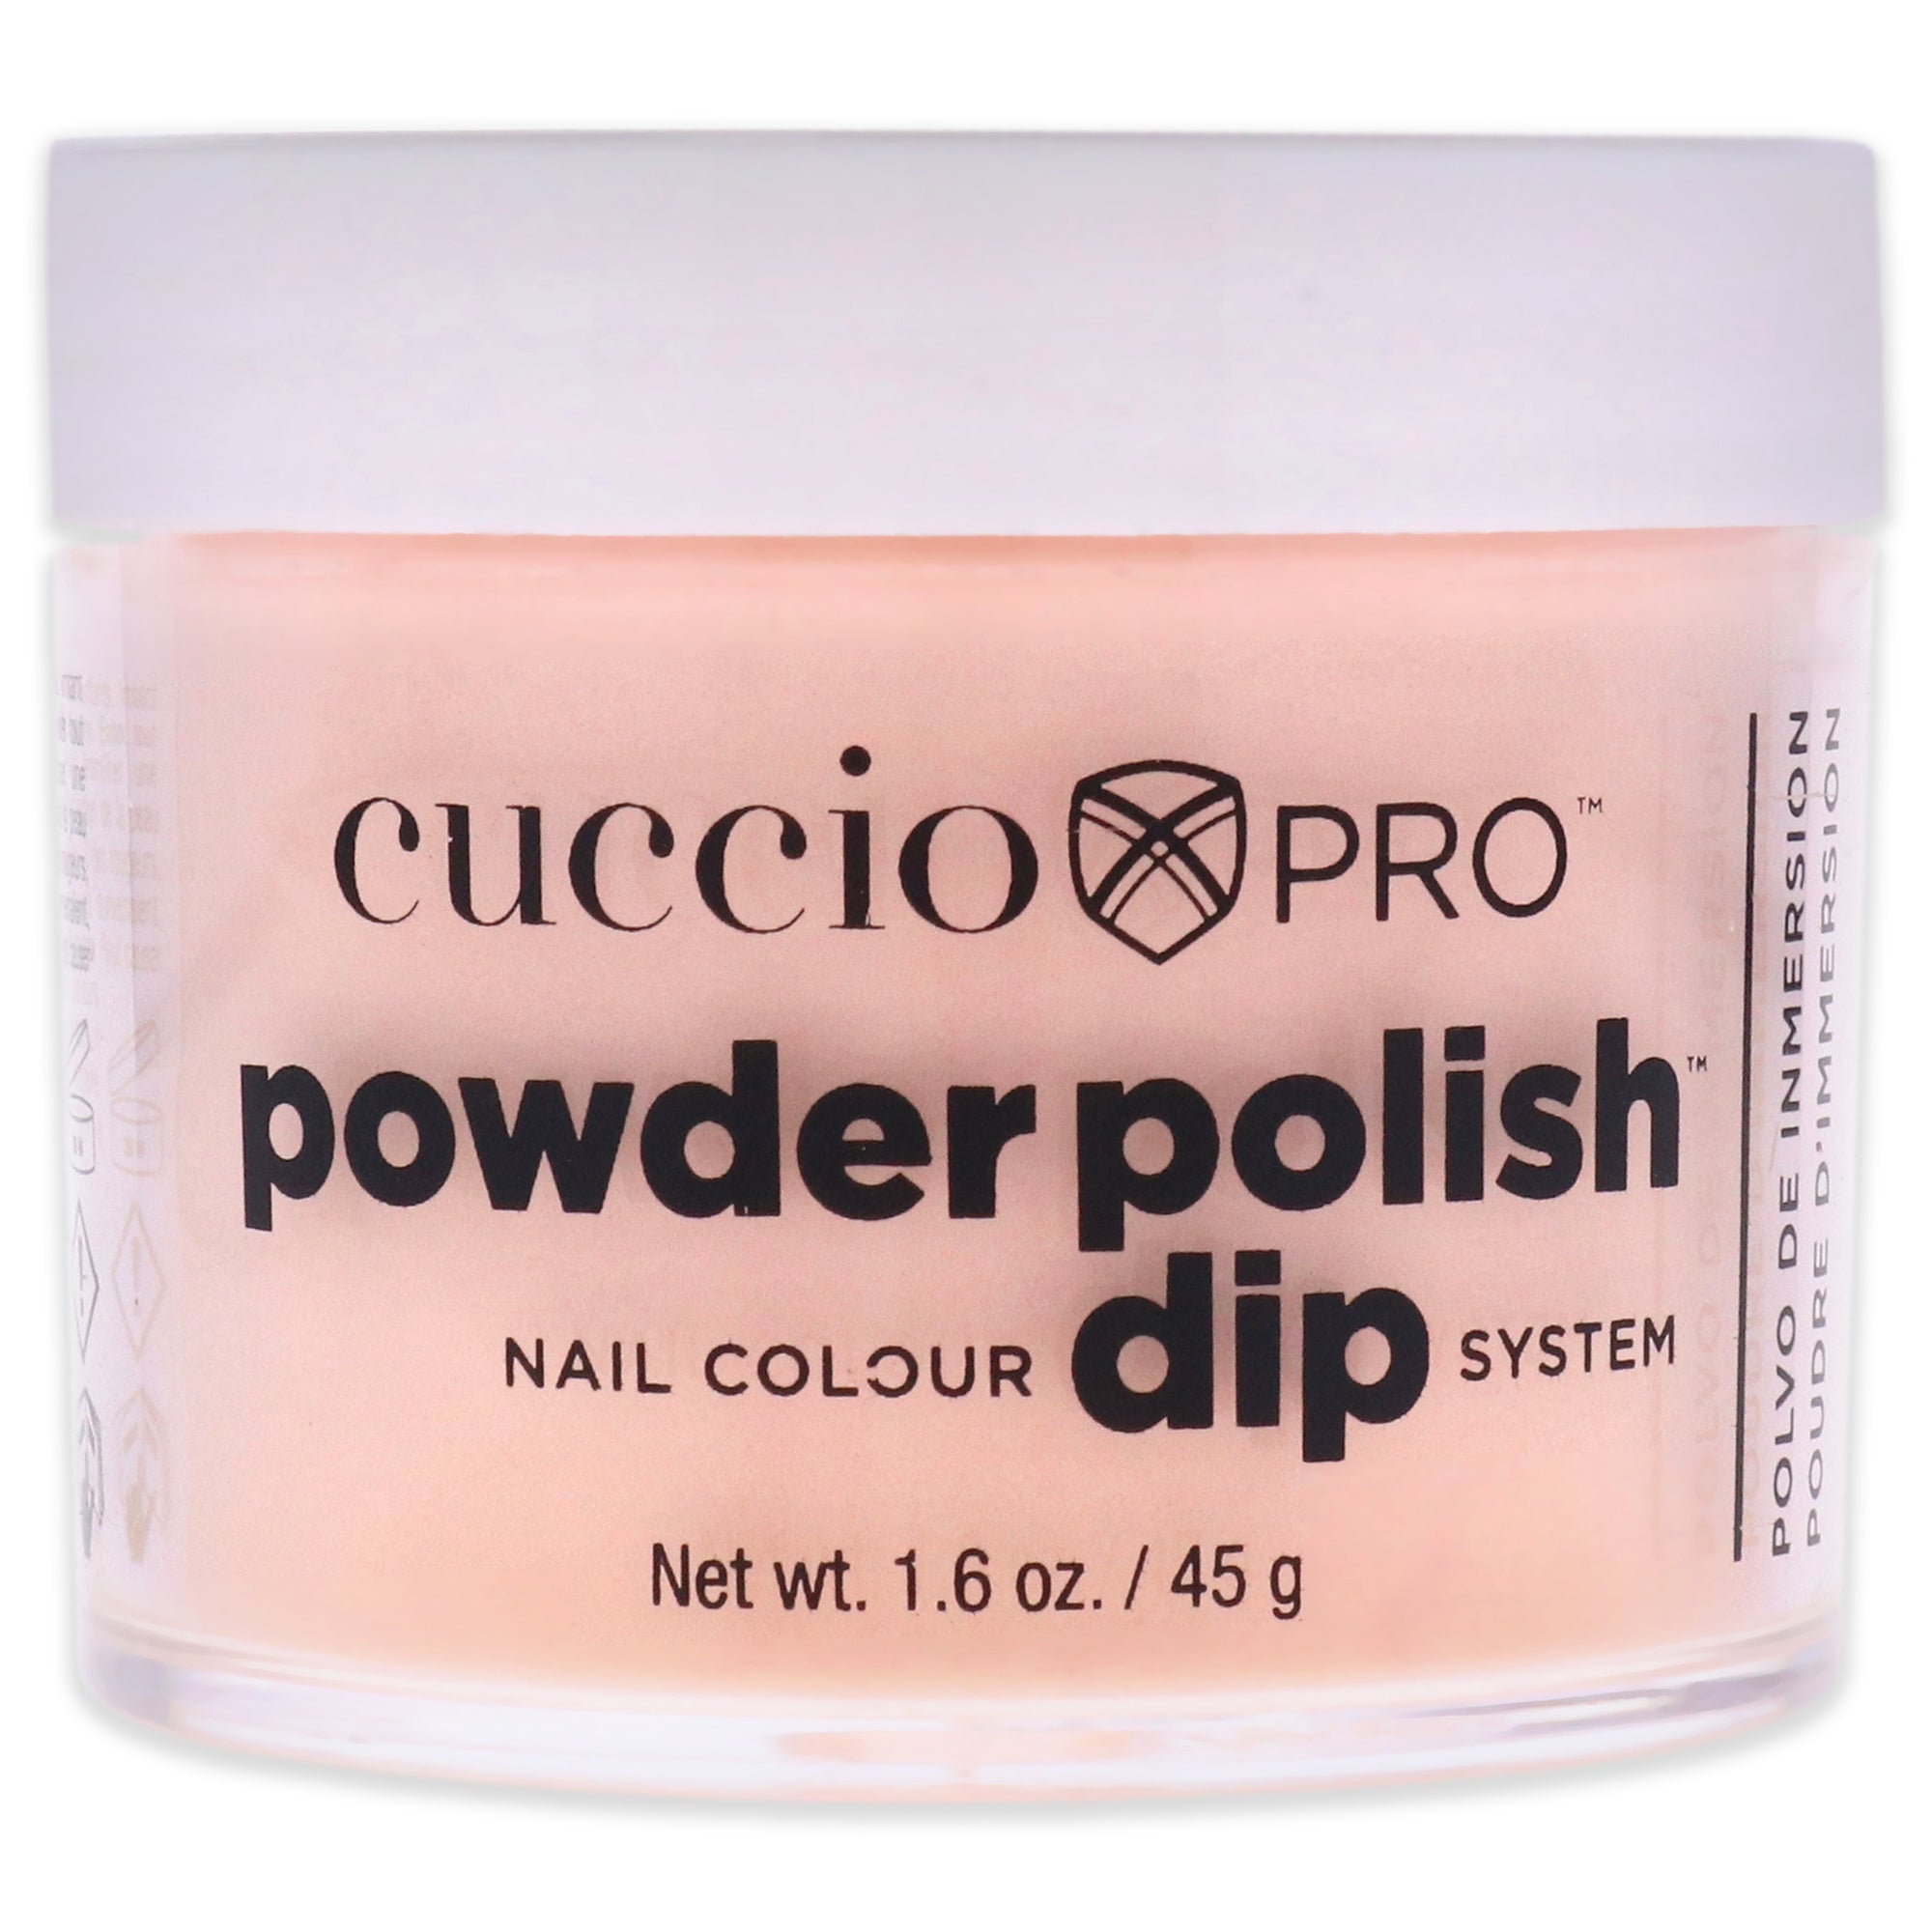 Pro Powder Polish Nail Colour Dip System - Peach Sorbet by Cuccio Colour for Women - 1.6 oz Nail Powder